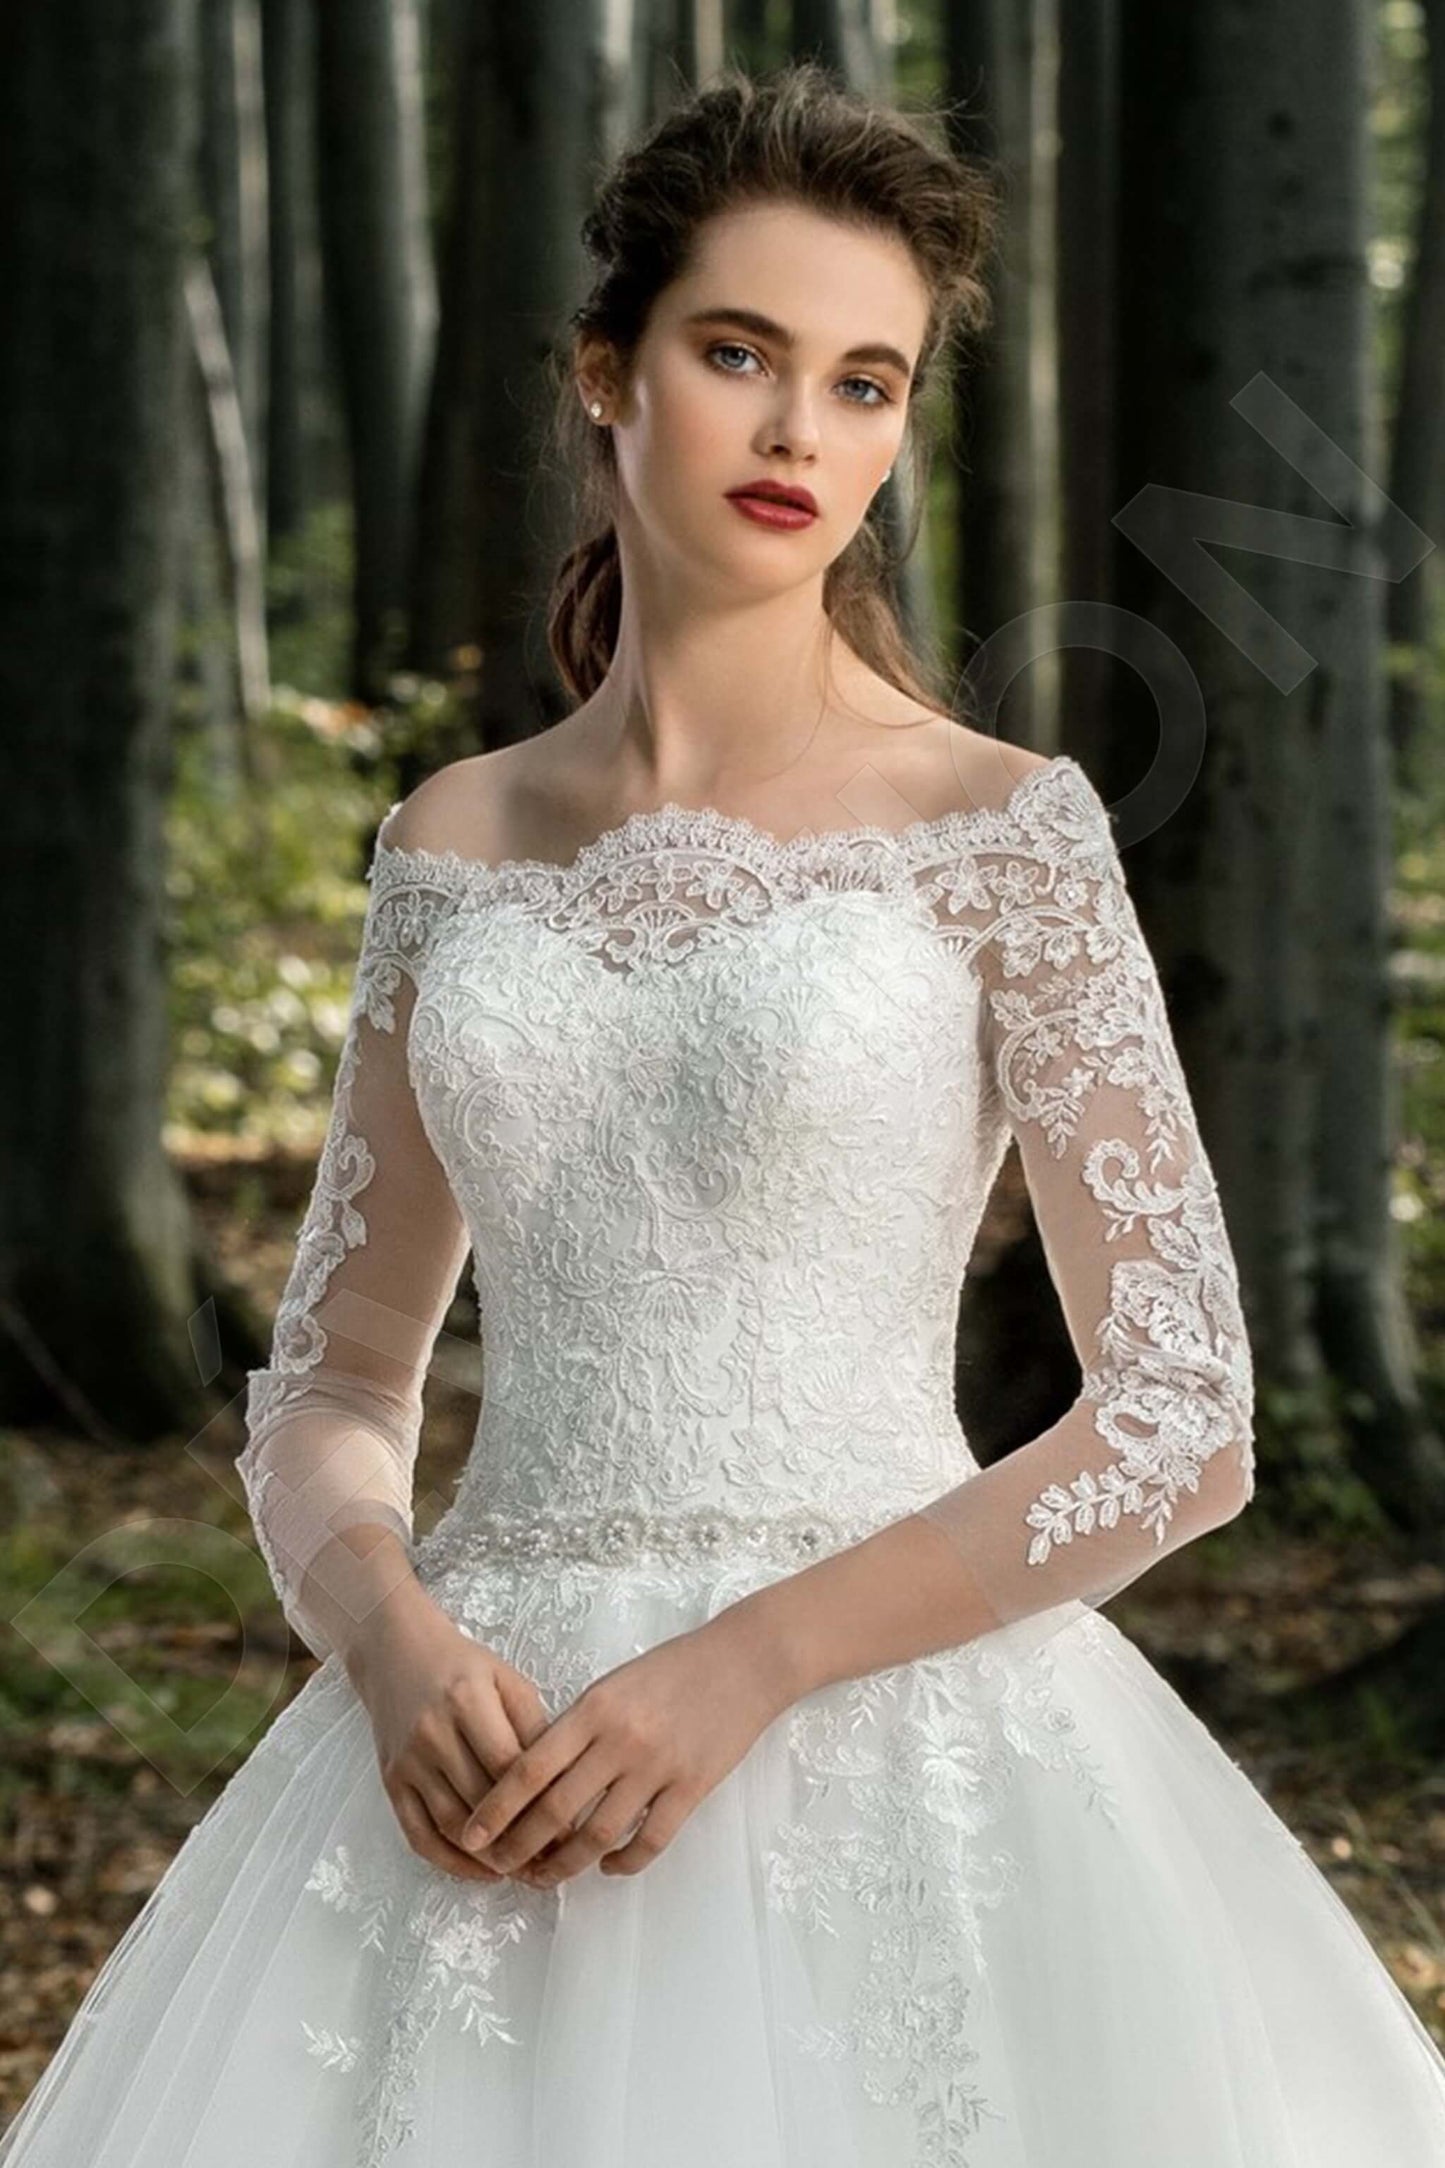 Jezebelle Full back Princess/Ball Gown 3/4 sleeve Wedding Dress 3